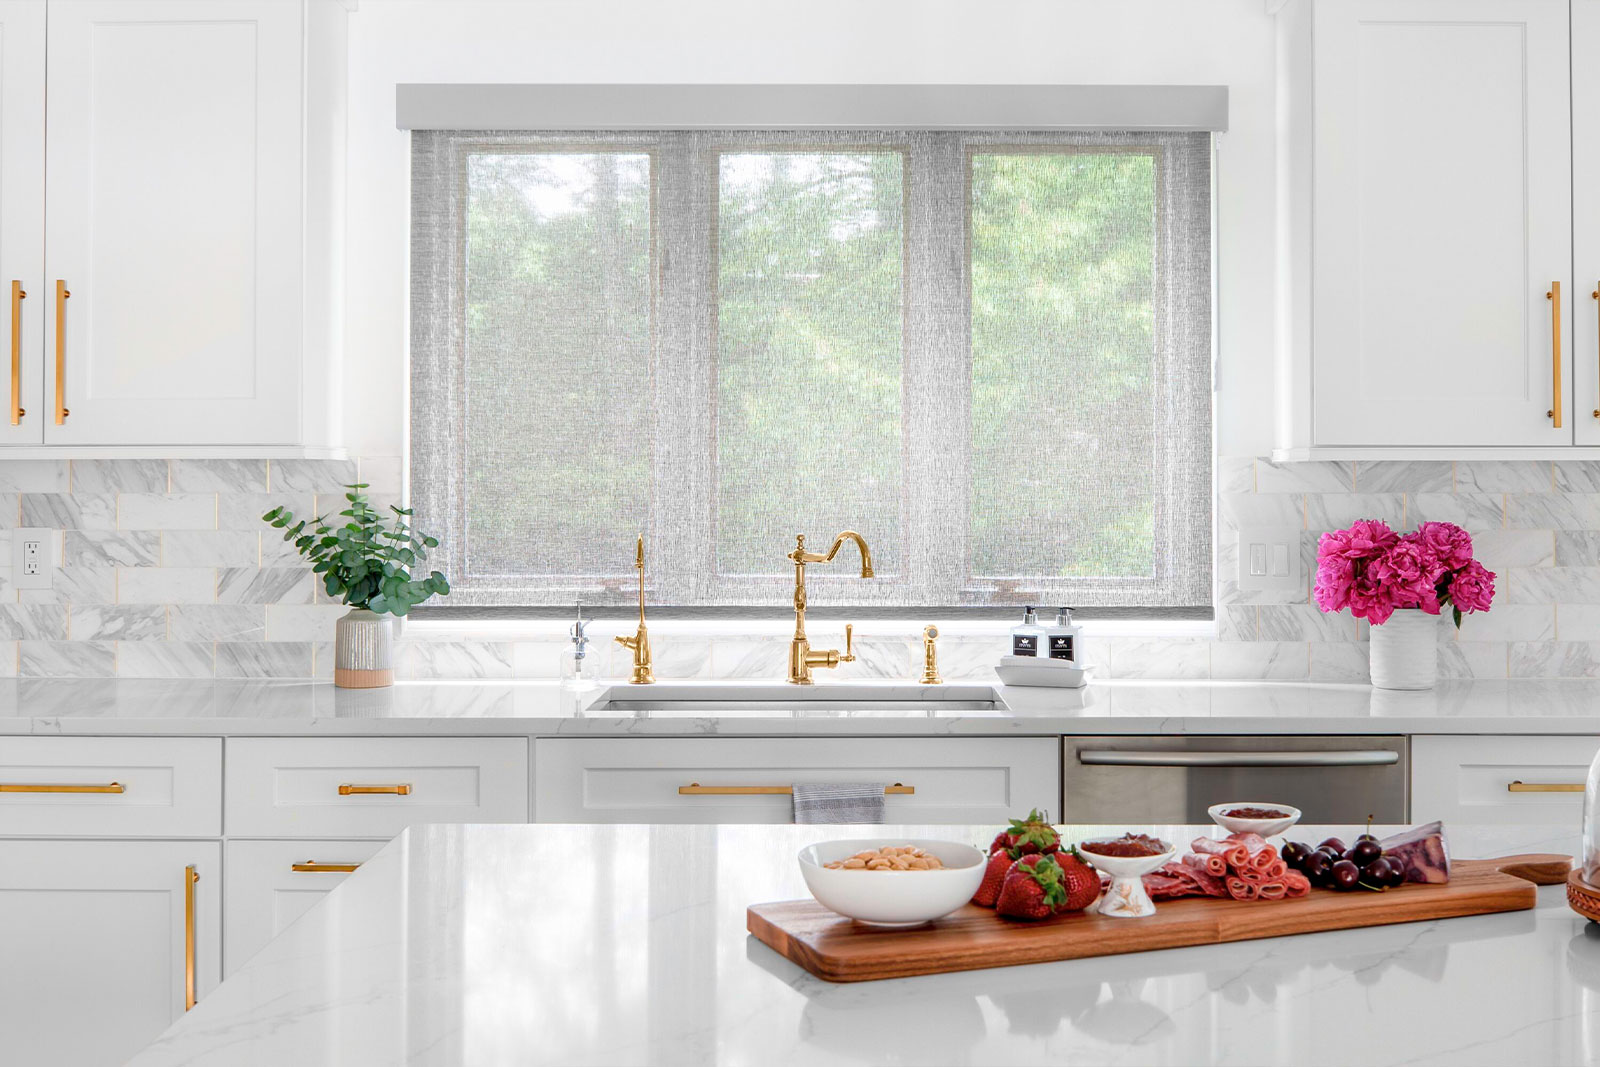 Light shines through light grey solar shade on three windows behind a kitchen sink.